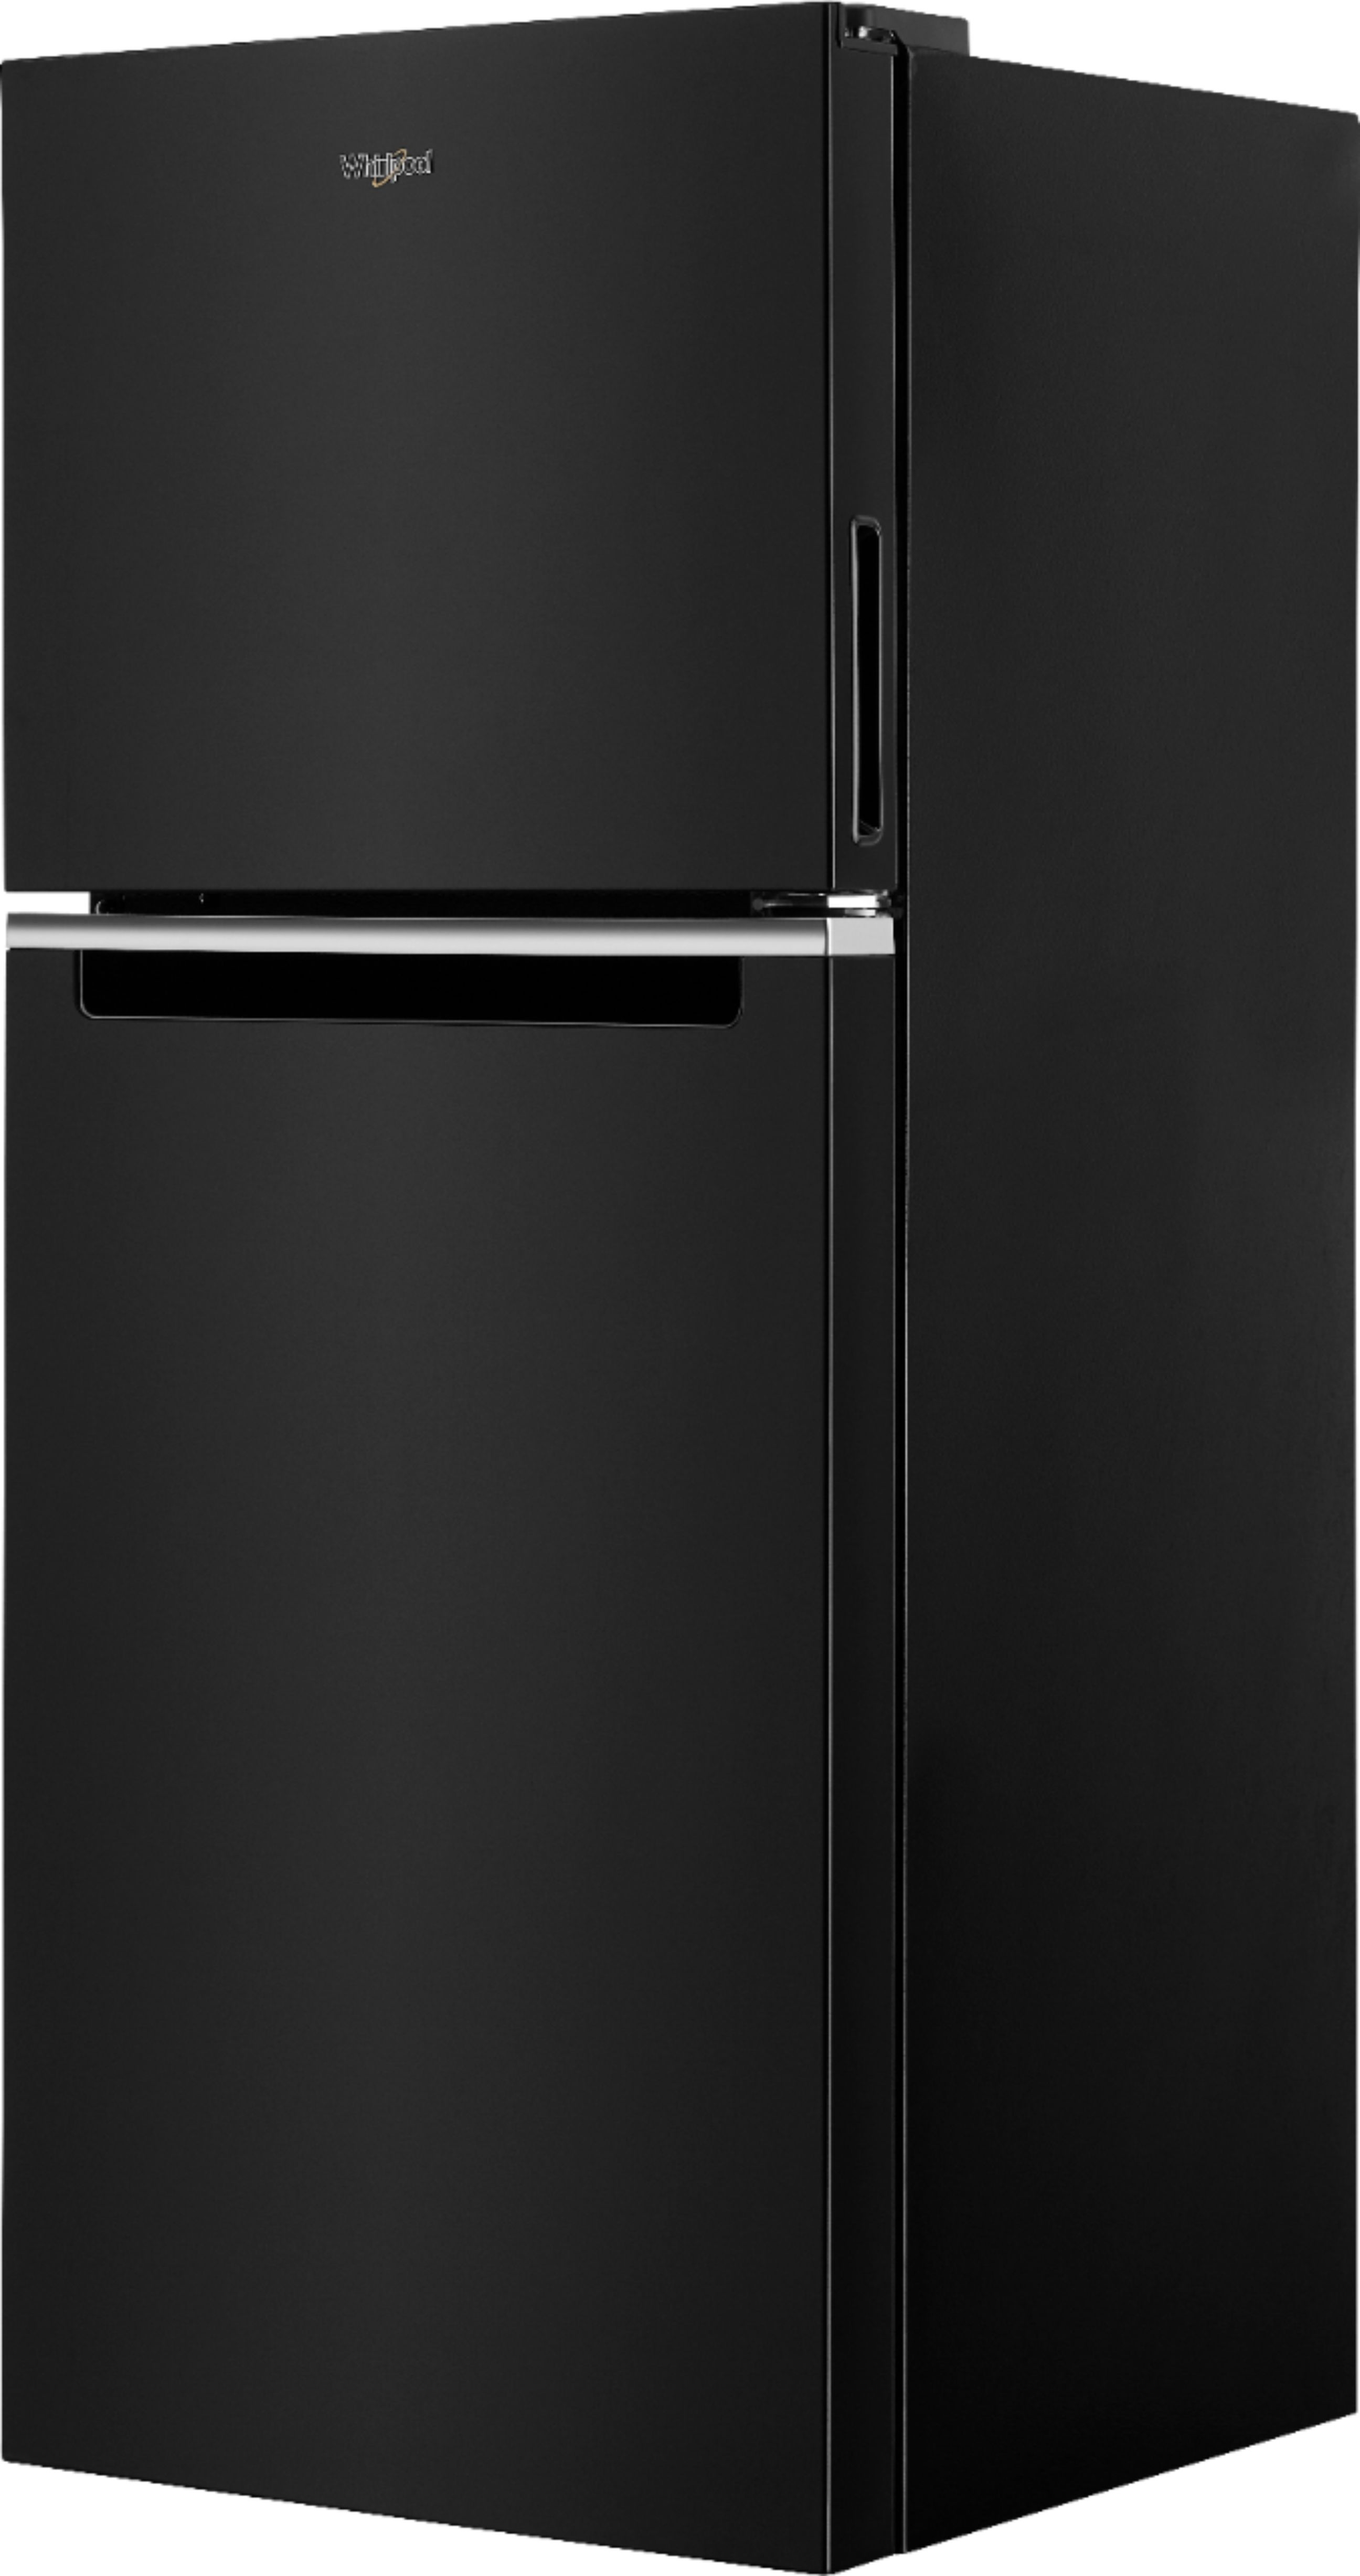 Left View: Whirlpool - 18.2 Cu. Ft. Top-Freezer Refrigerator - Black